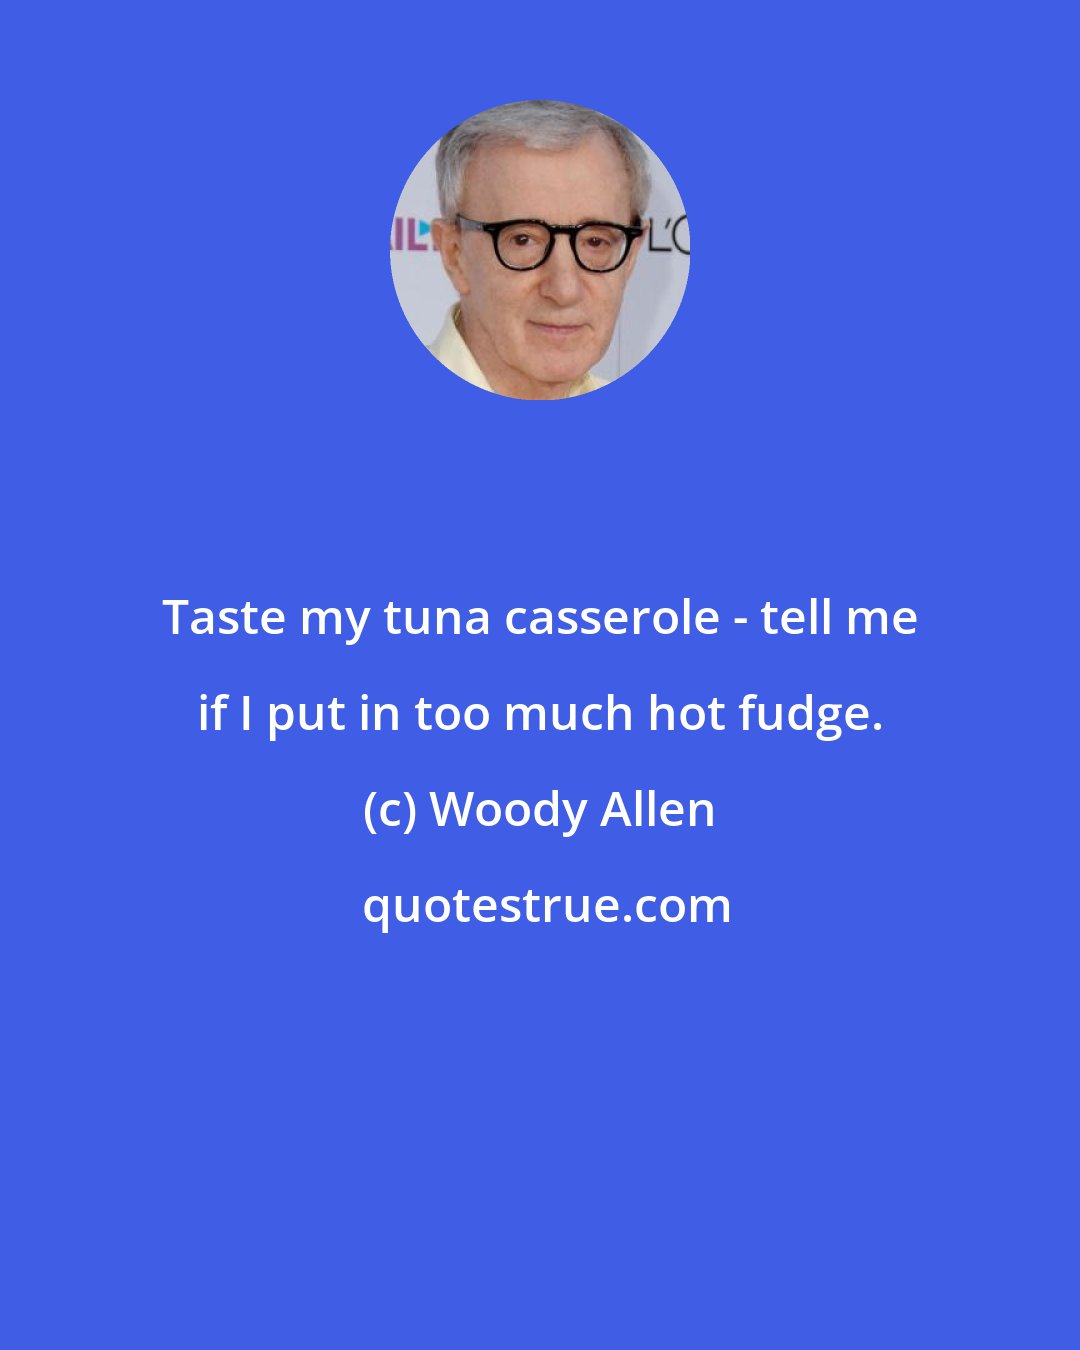 Woody Allen: Taste my tuna casserole - tell me if I put in too much hot fudge.